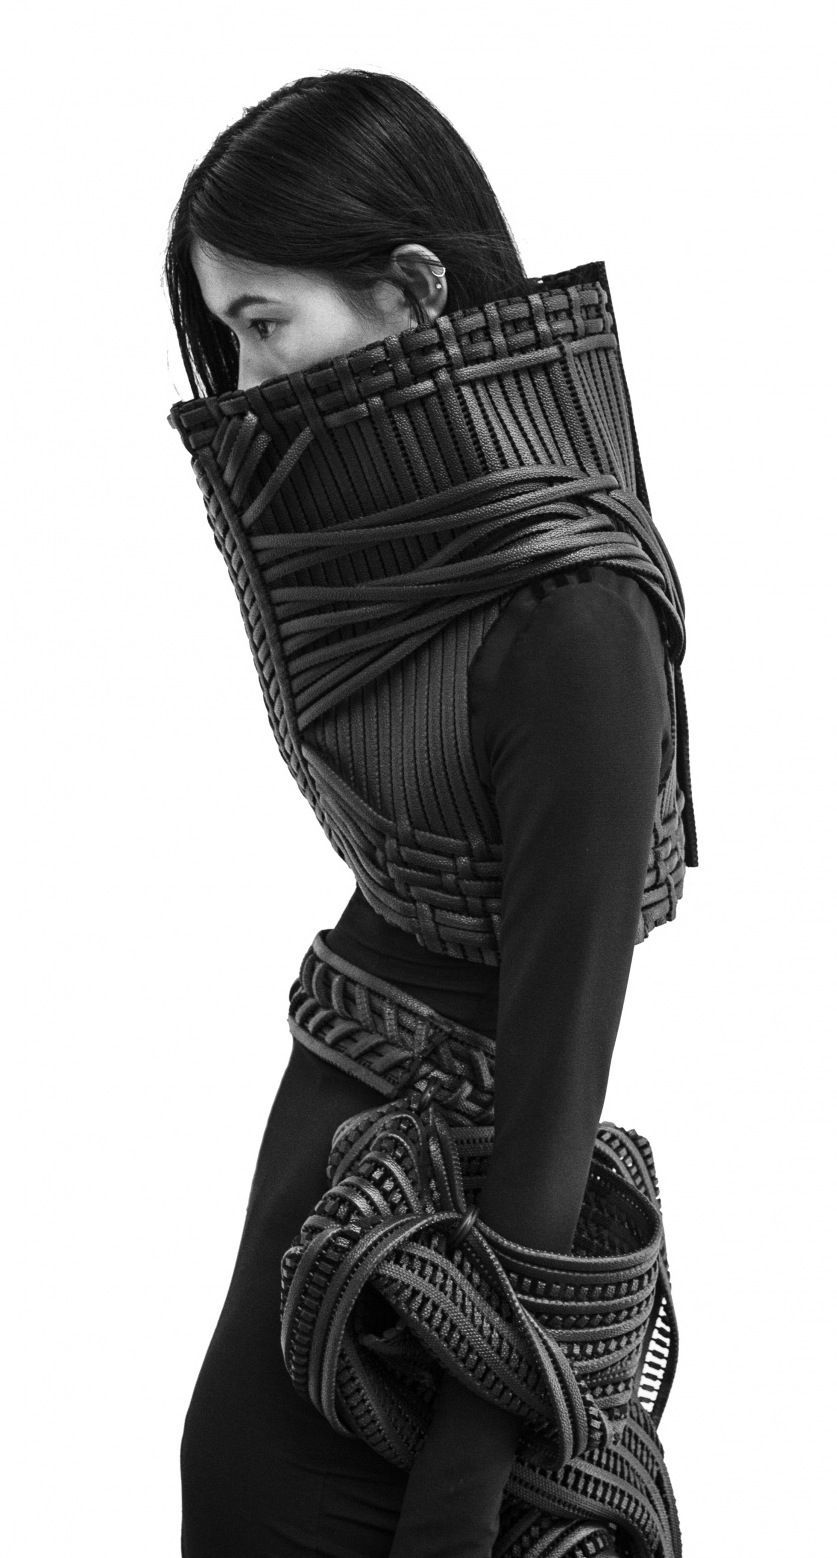 Fashion as Art – experimental fashion design with woven leather; sculptural fashion armour // Sarah Ryan